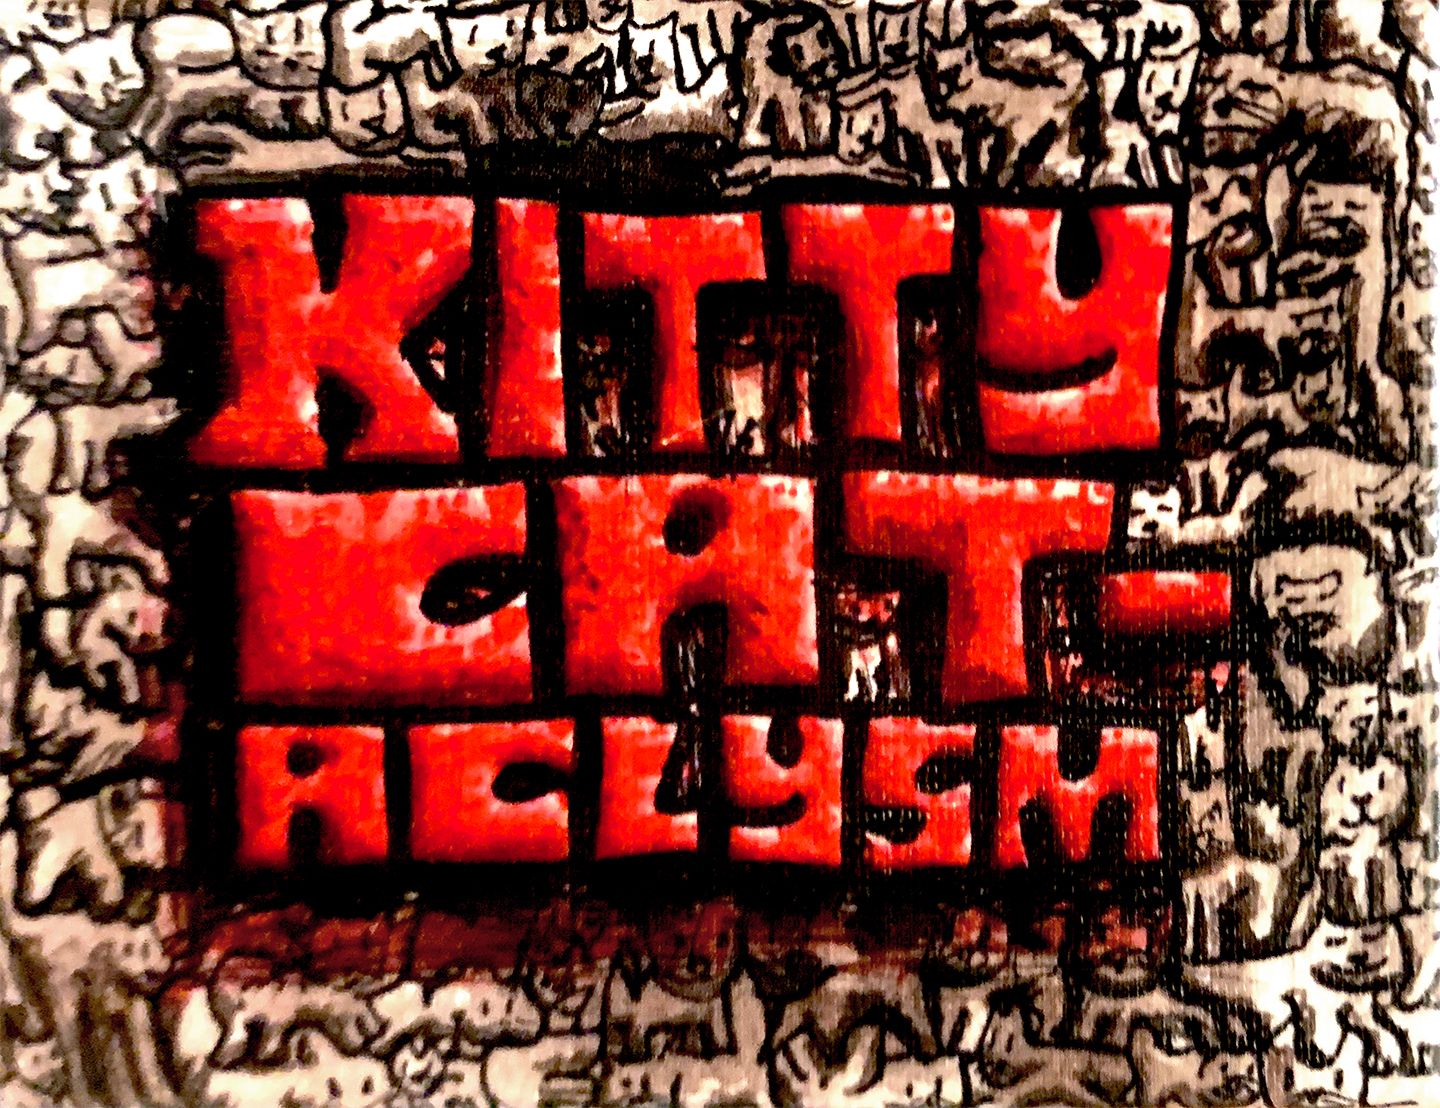 Kitty Cataclysm